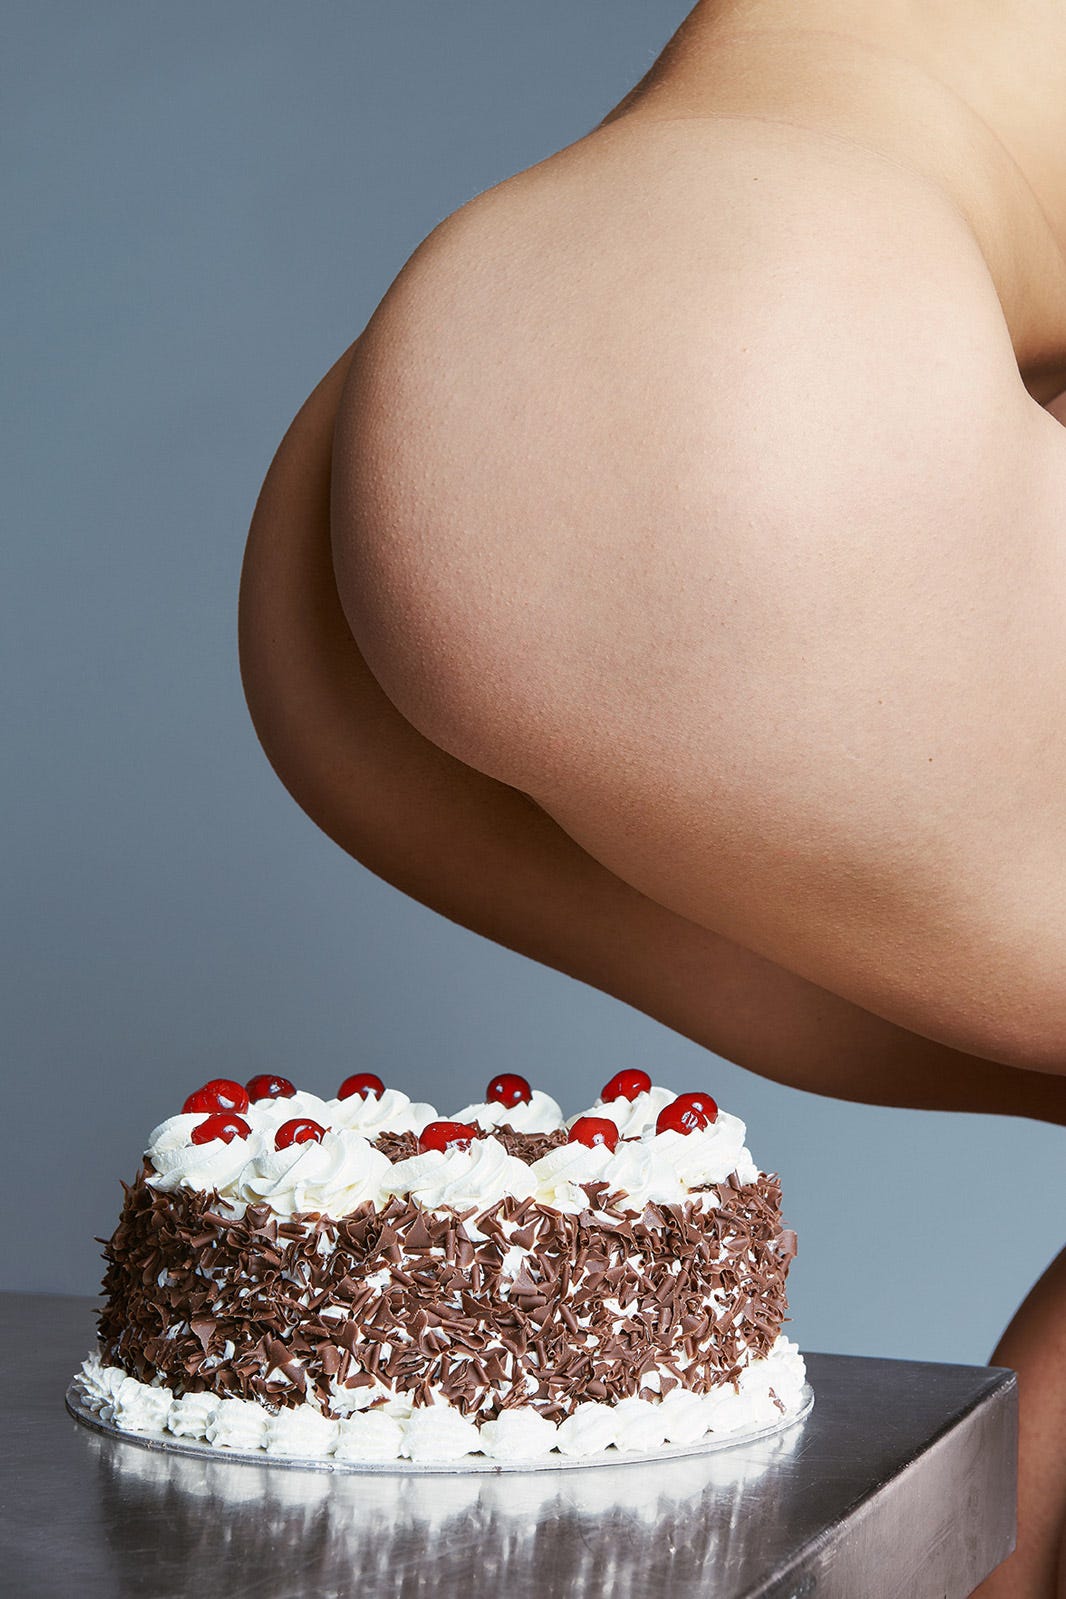 Naked man on cake